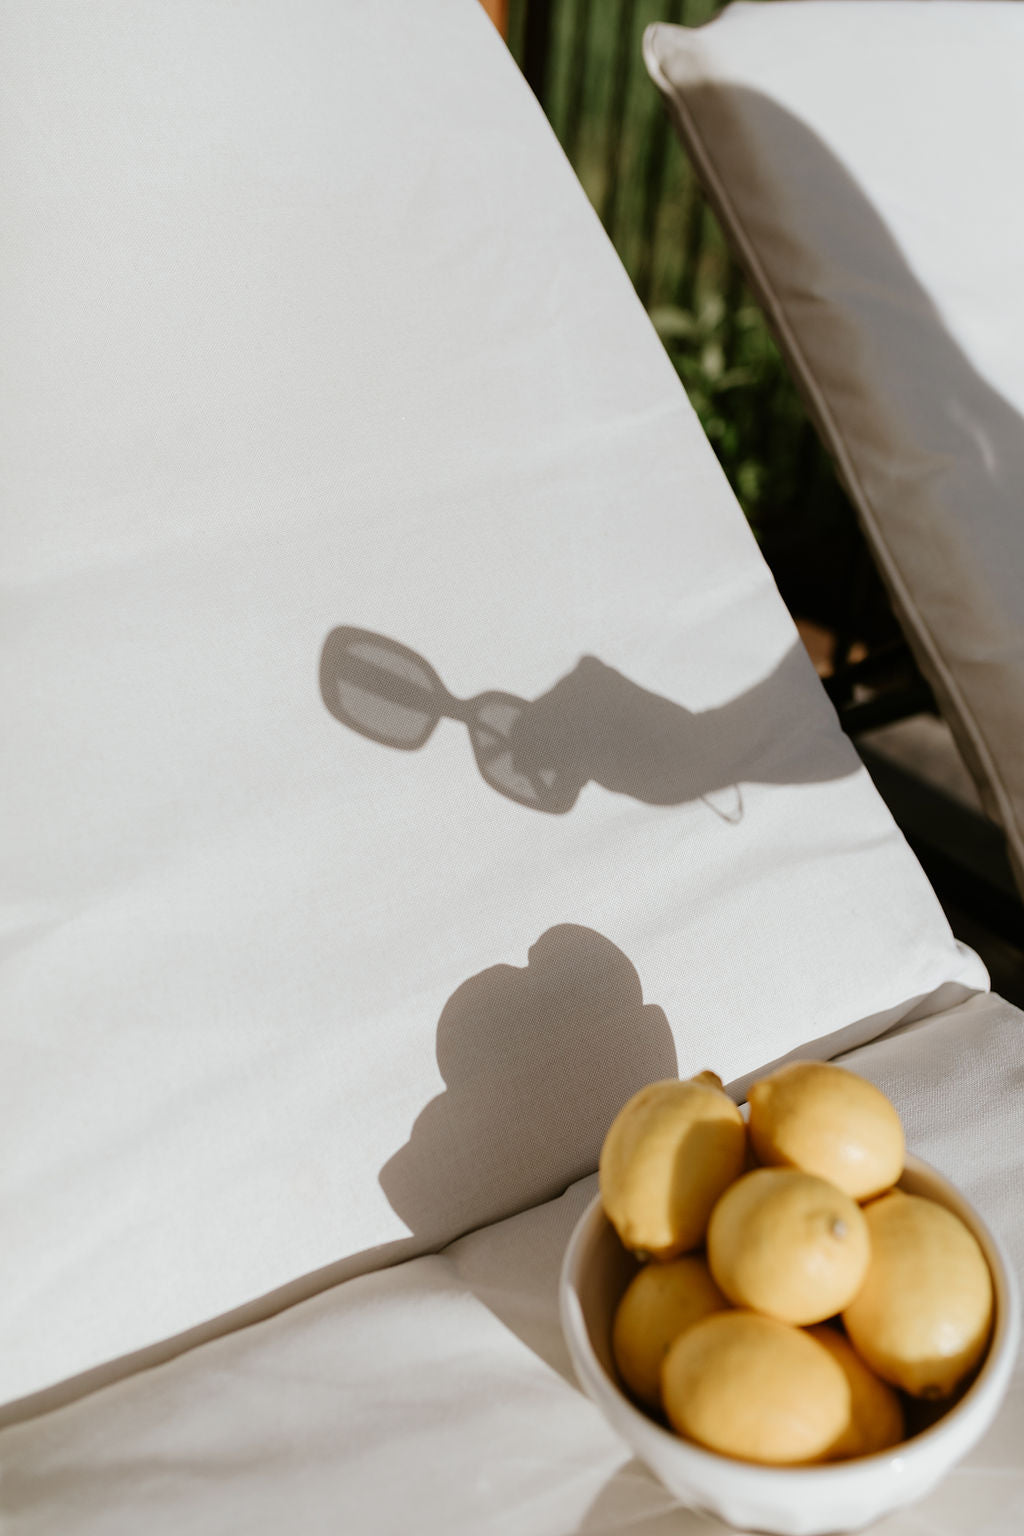 shadow of sunglasses on a beach chair with lemons